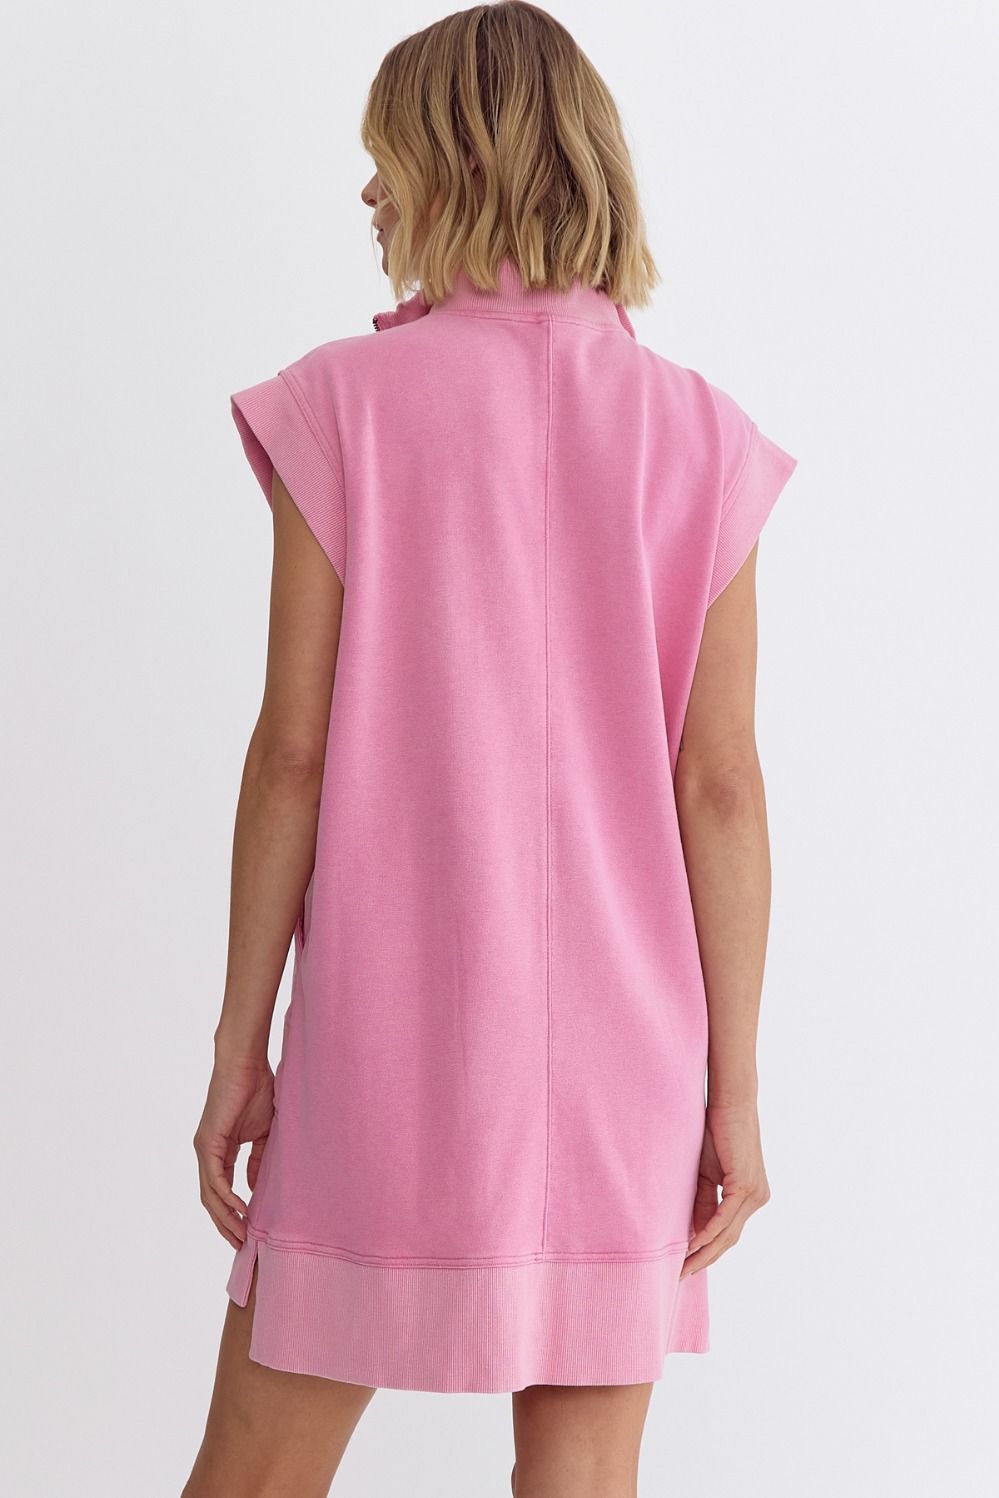 Divine Comfort Pink Dress